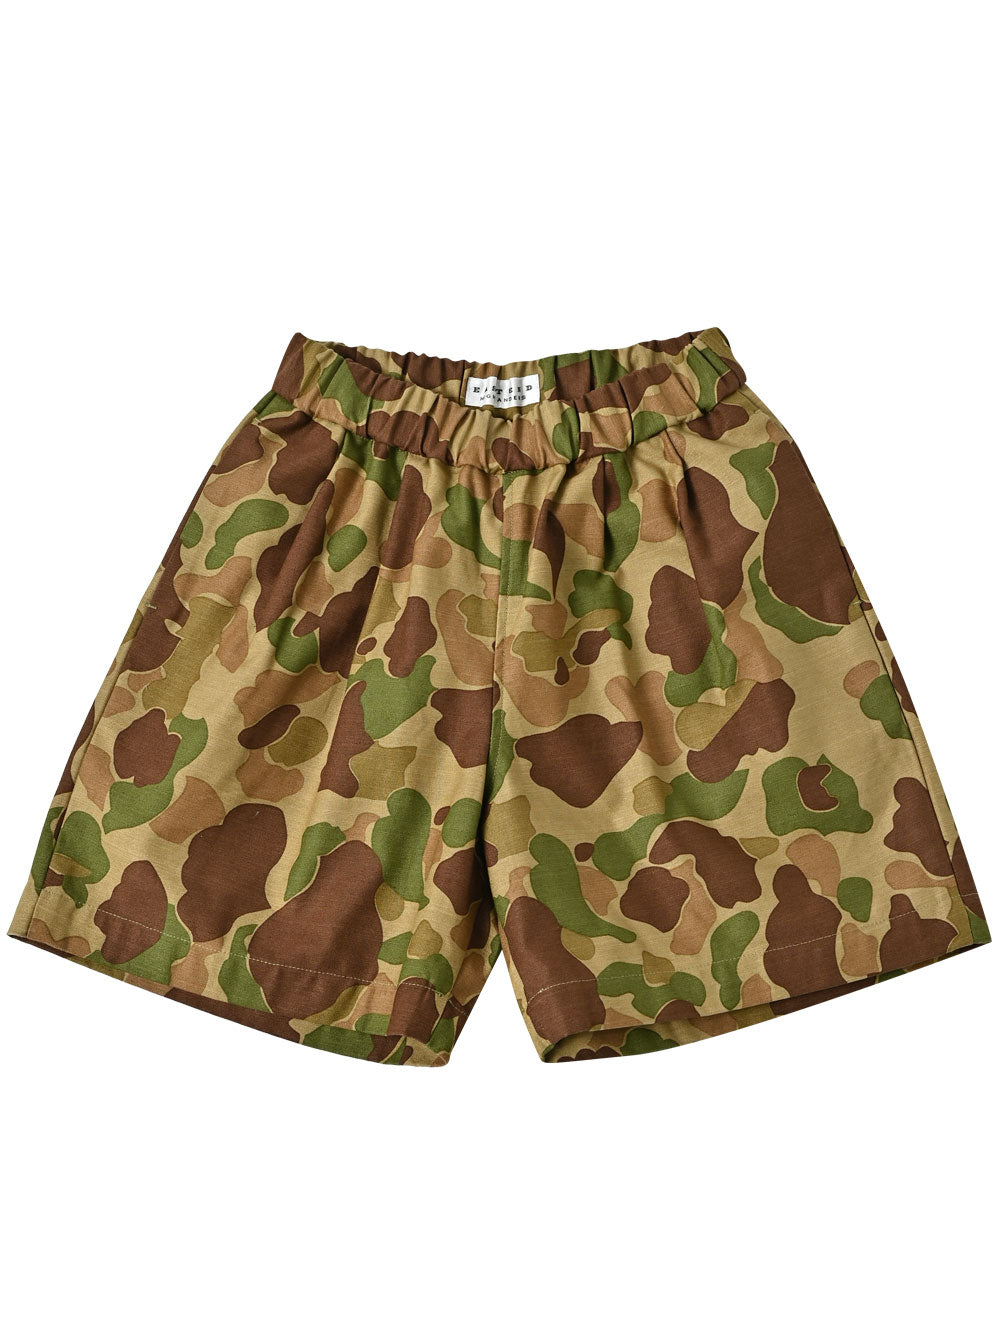 Khaki Camo Shorts